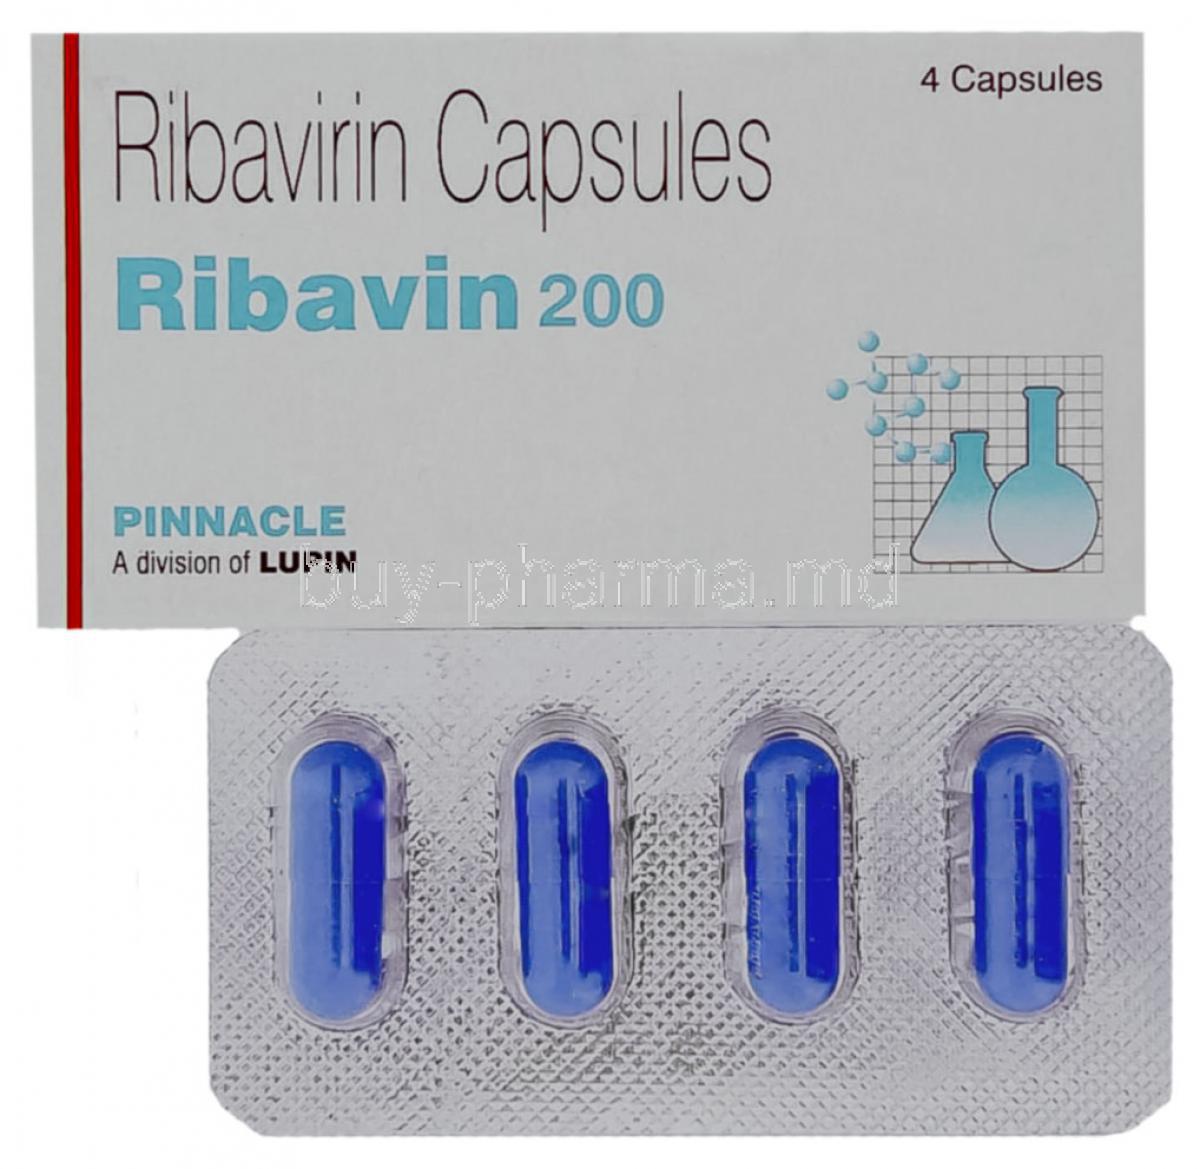 Generic Copegus , Ribavirin 200 mg Capsule and box